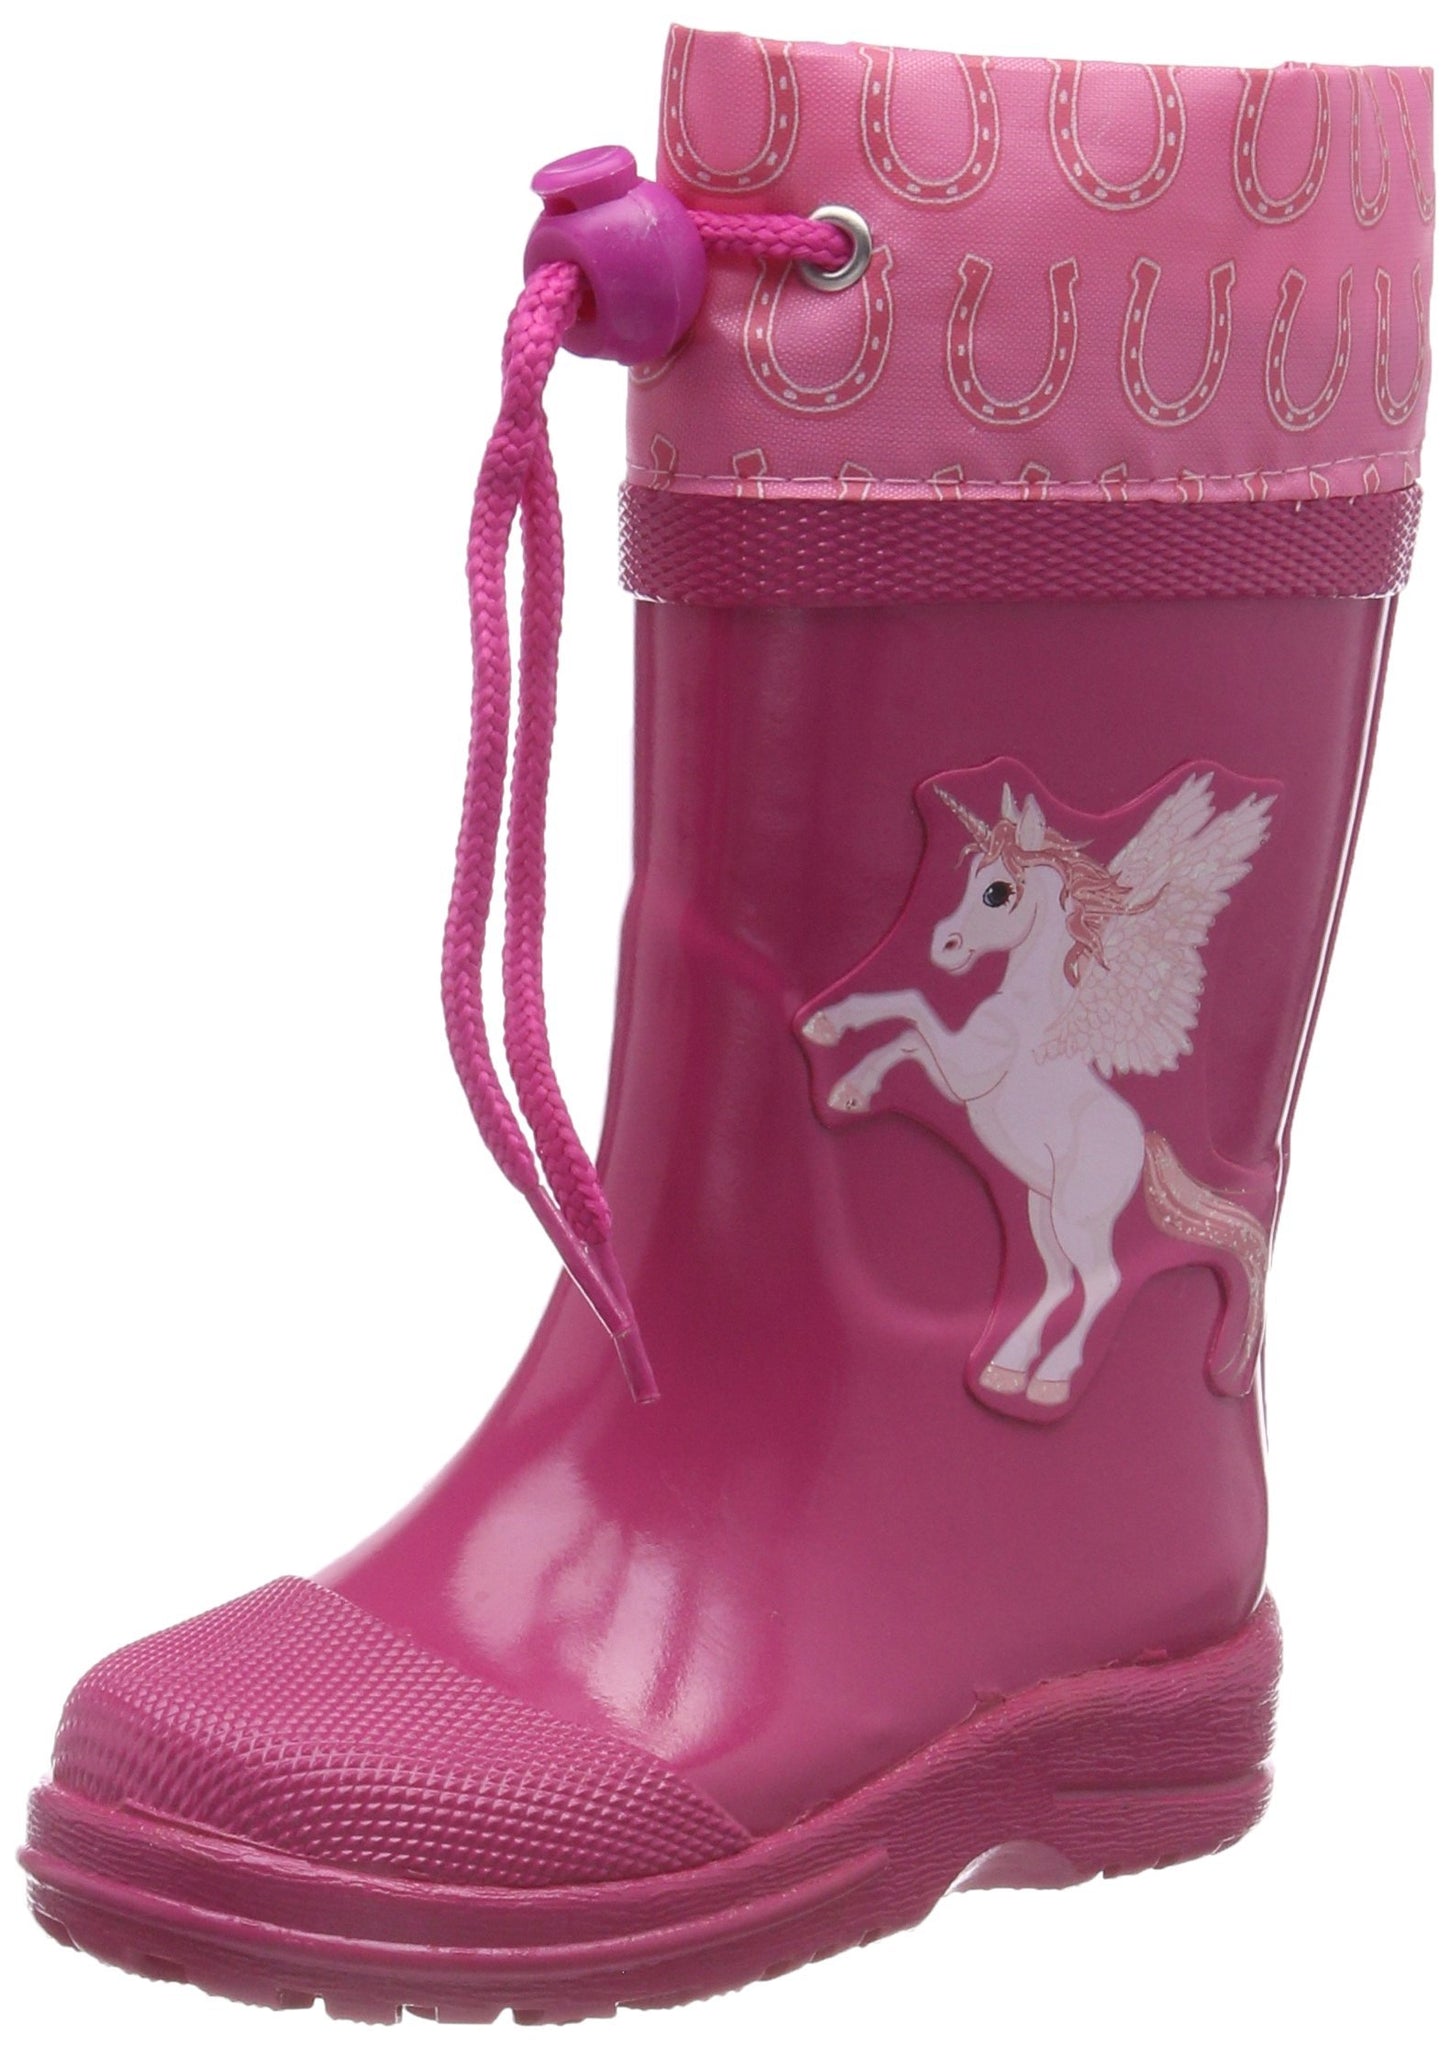 Unicorn wellington boots with laces